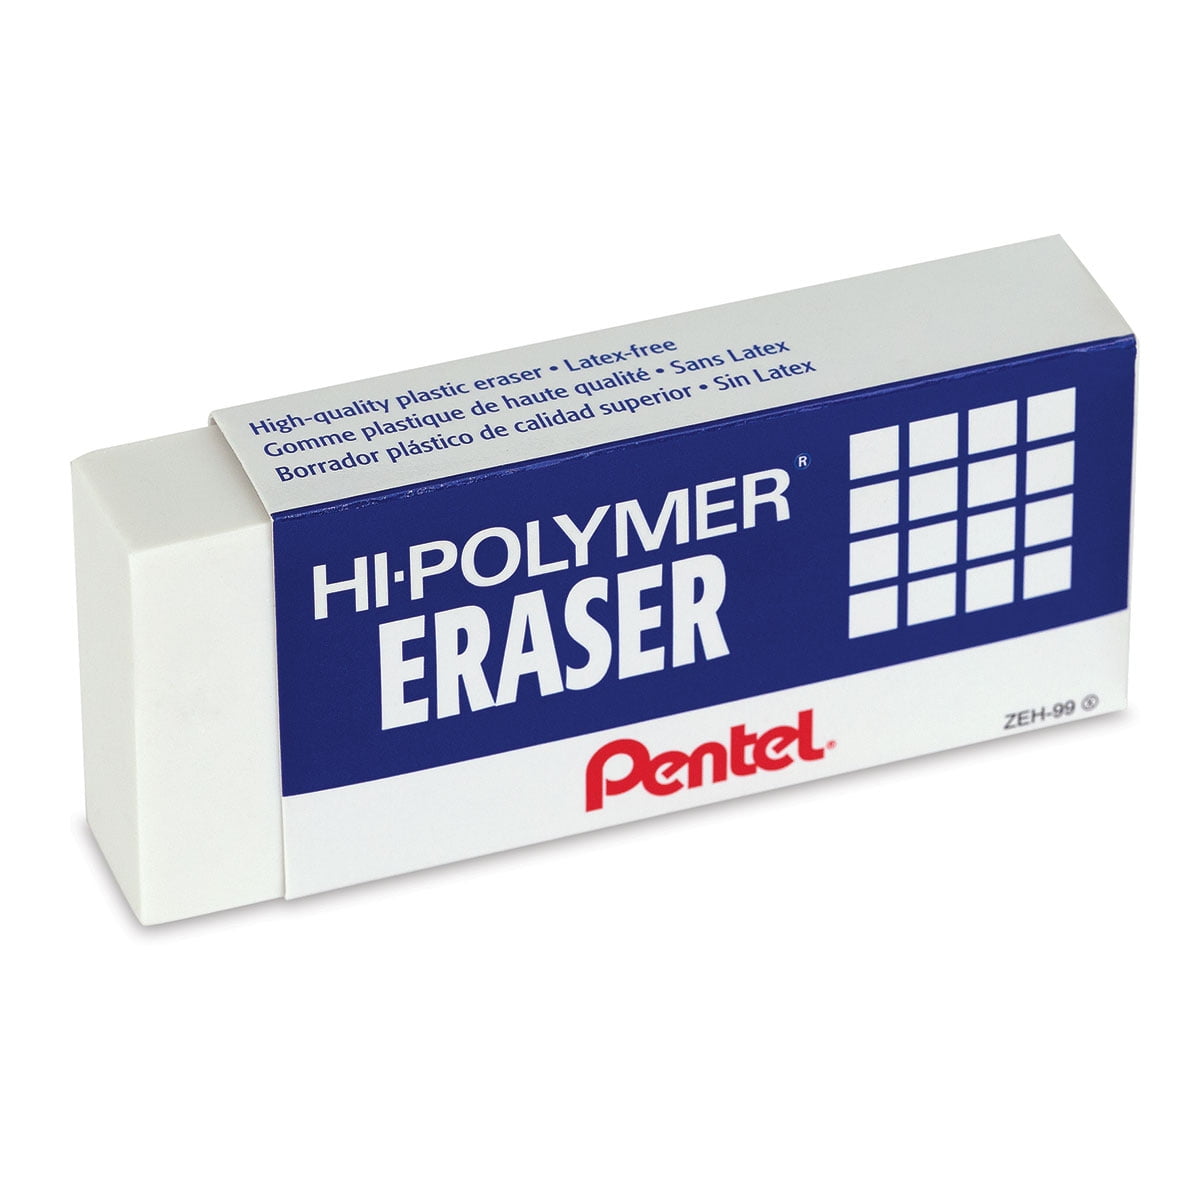 Pentel Erasers, Hi-Polymer - 3 erasers